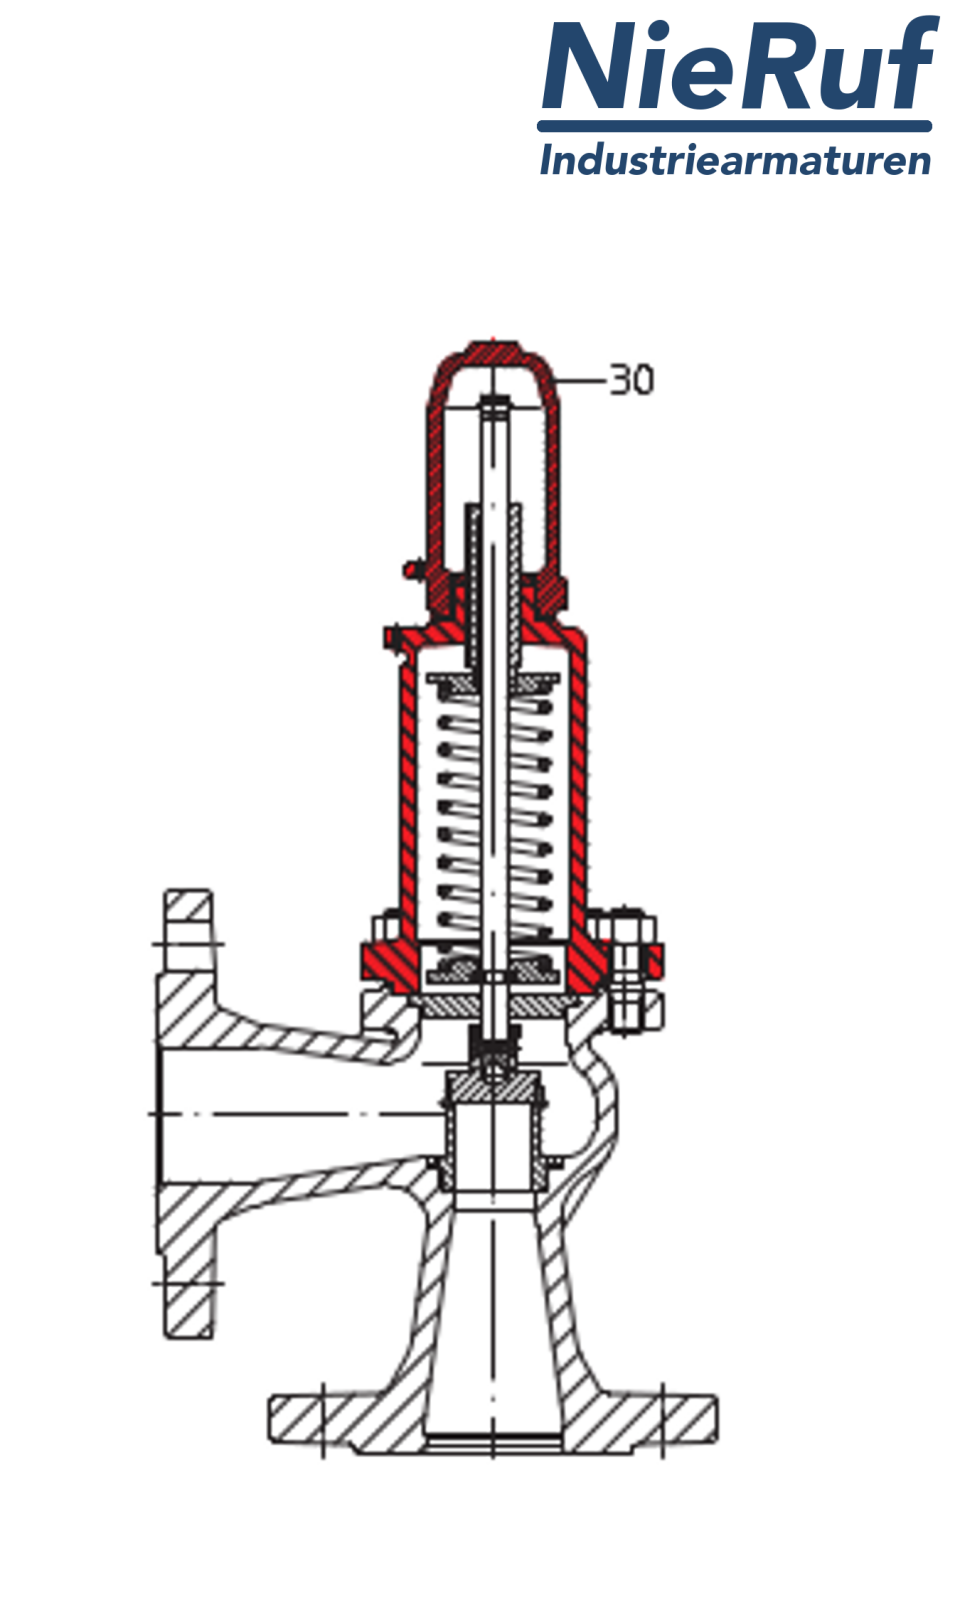 flange-safety valve DN65/DN65 SF0101, cast iron EN-JL1040 metal, without lever